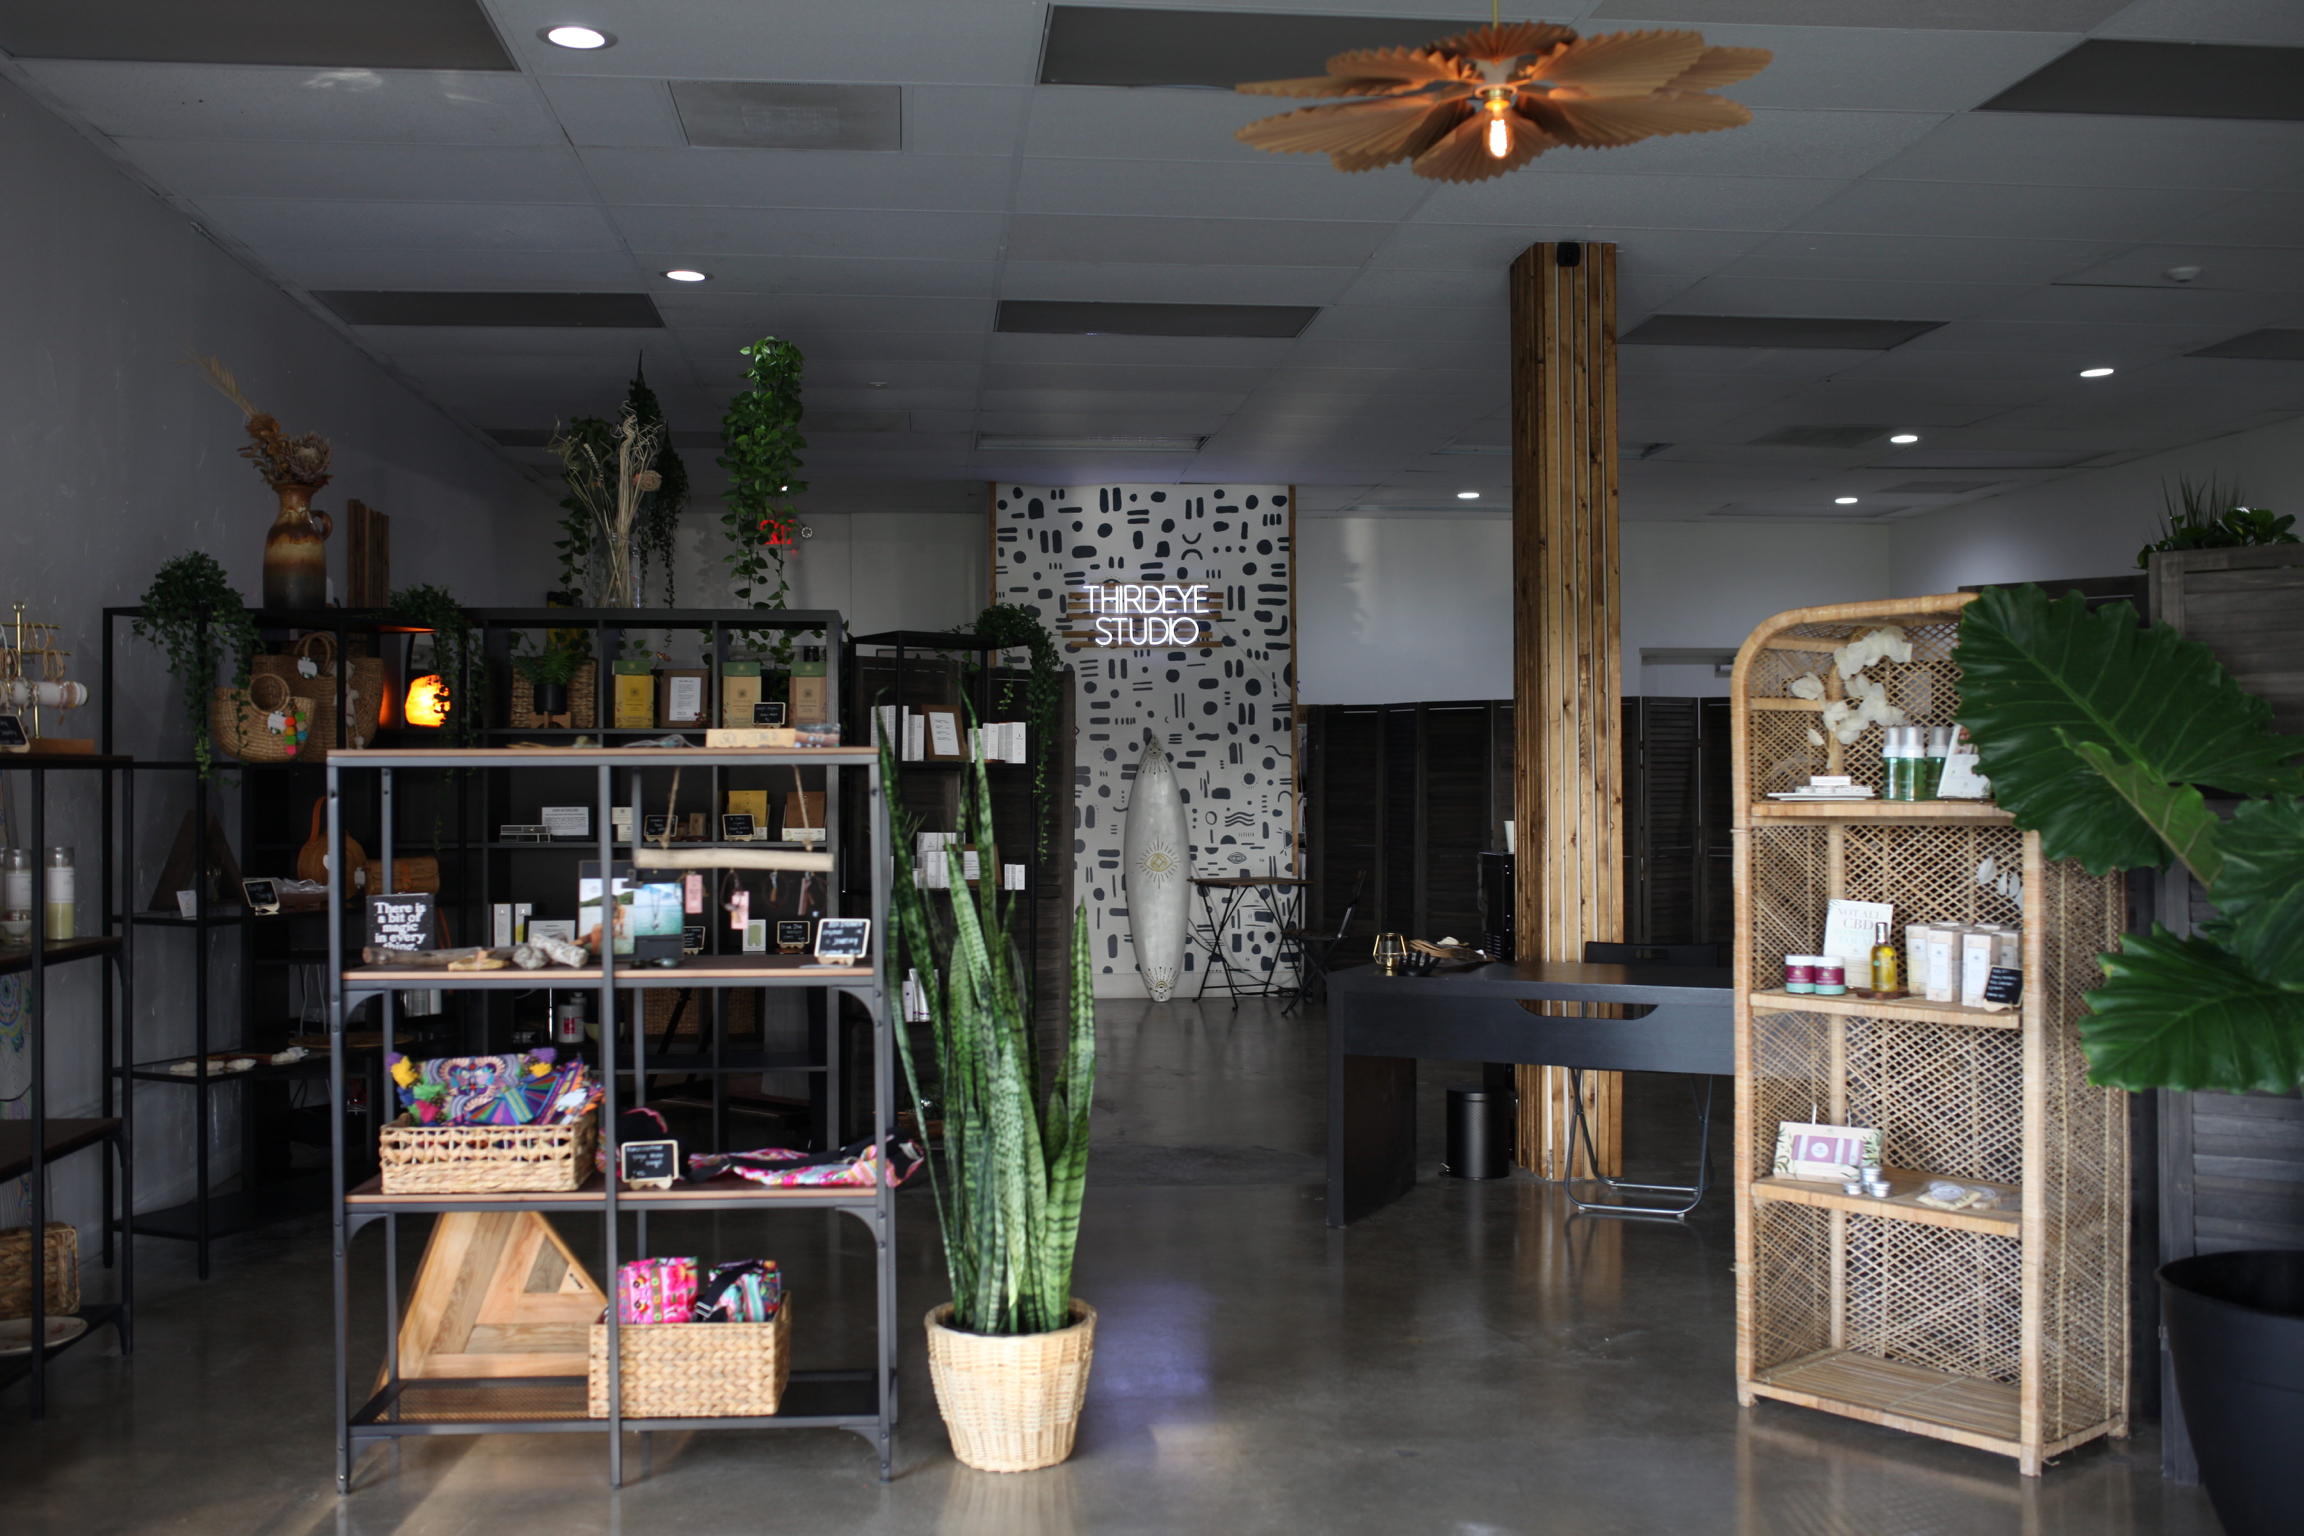 Thirdeye Studio interior. Tattoo studio with plants and bamboo decor.